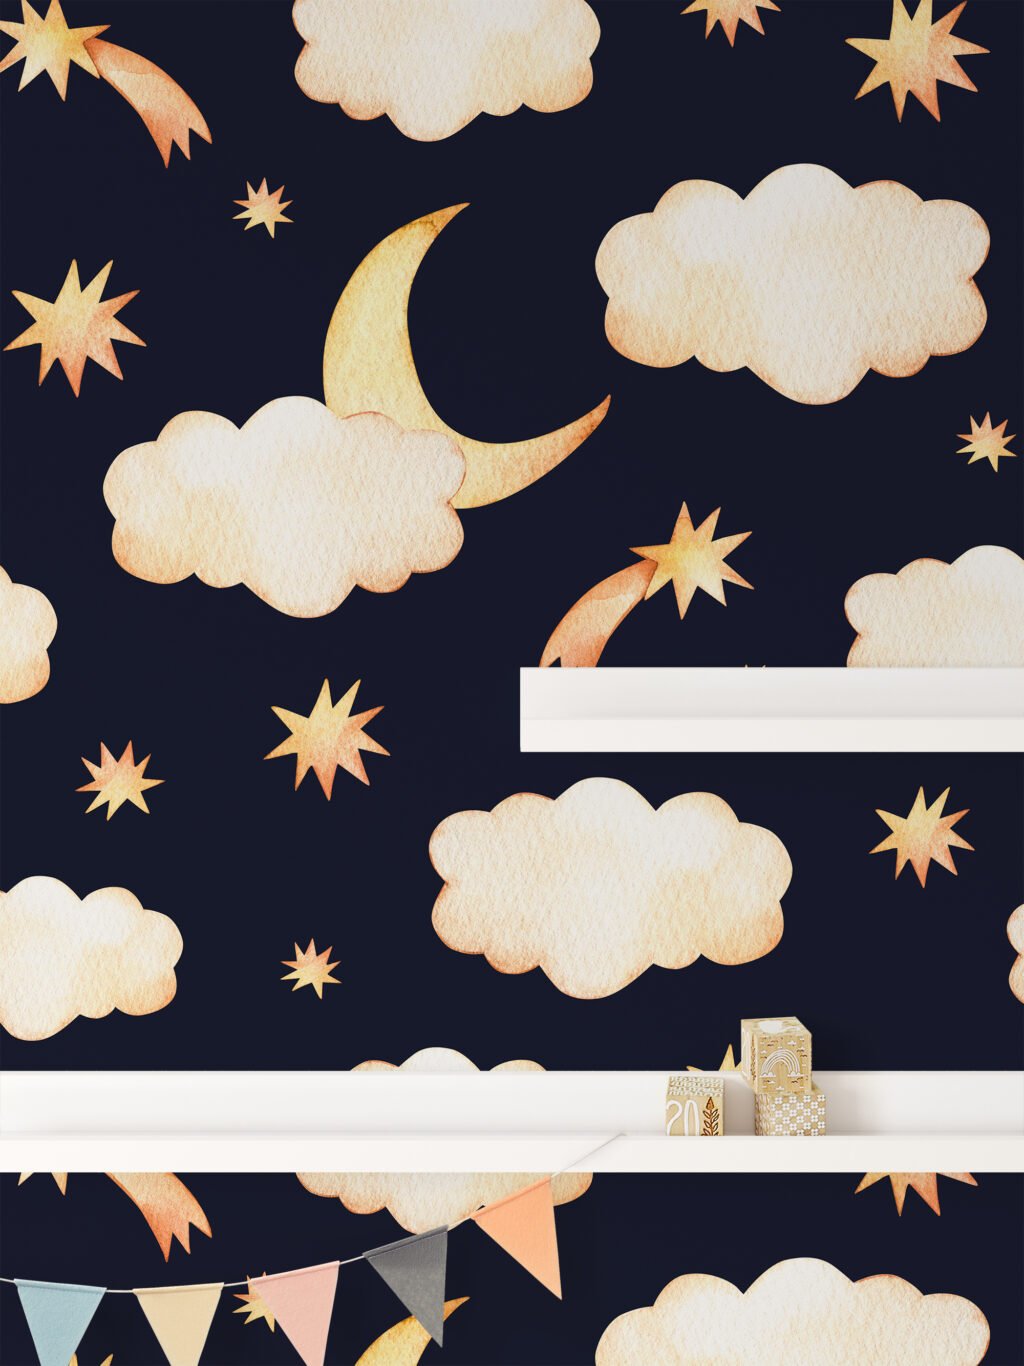 Watercolor Nursery Moon Night Clouds With Stars Illustration Wallpaper, Night Sky Dreams Peel & Stick Wall Mural